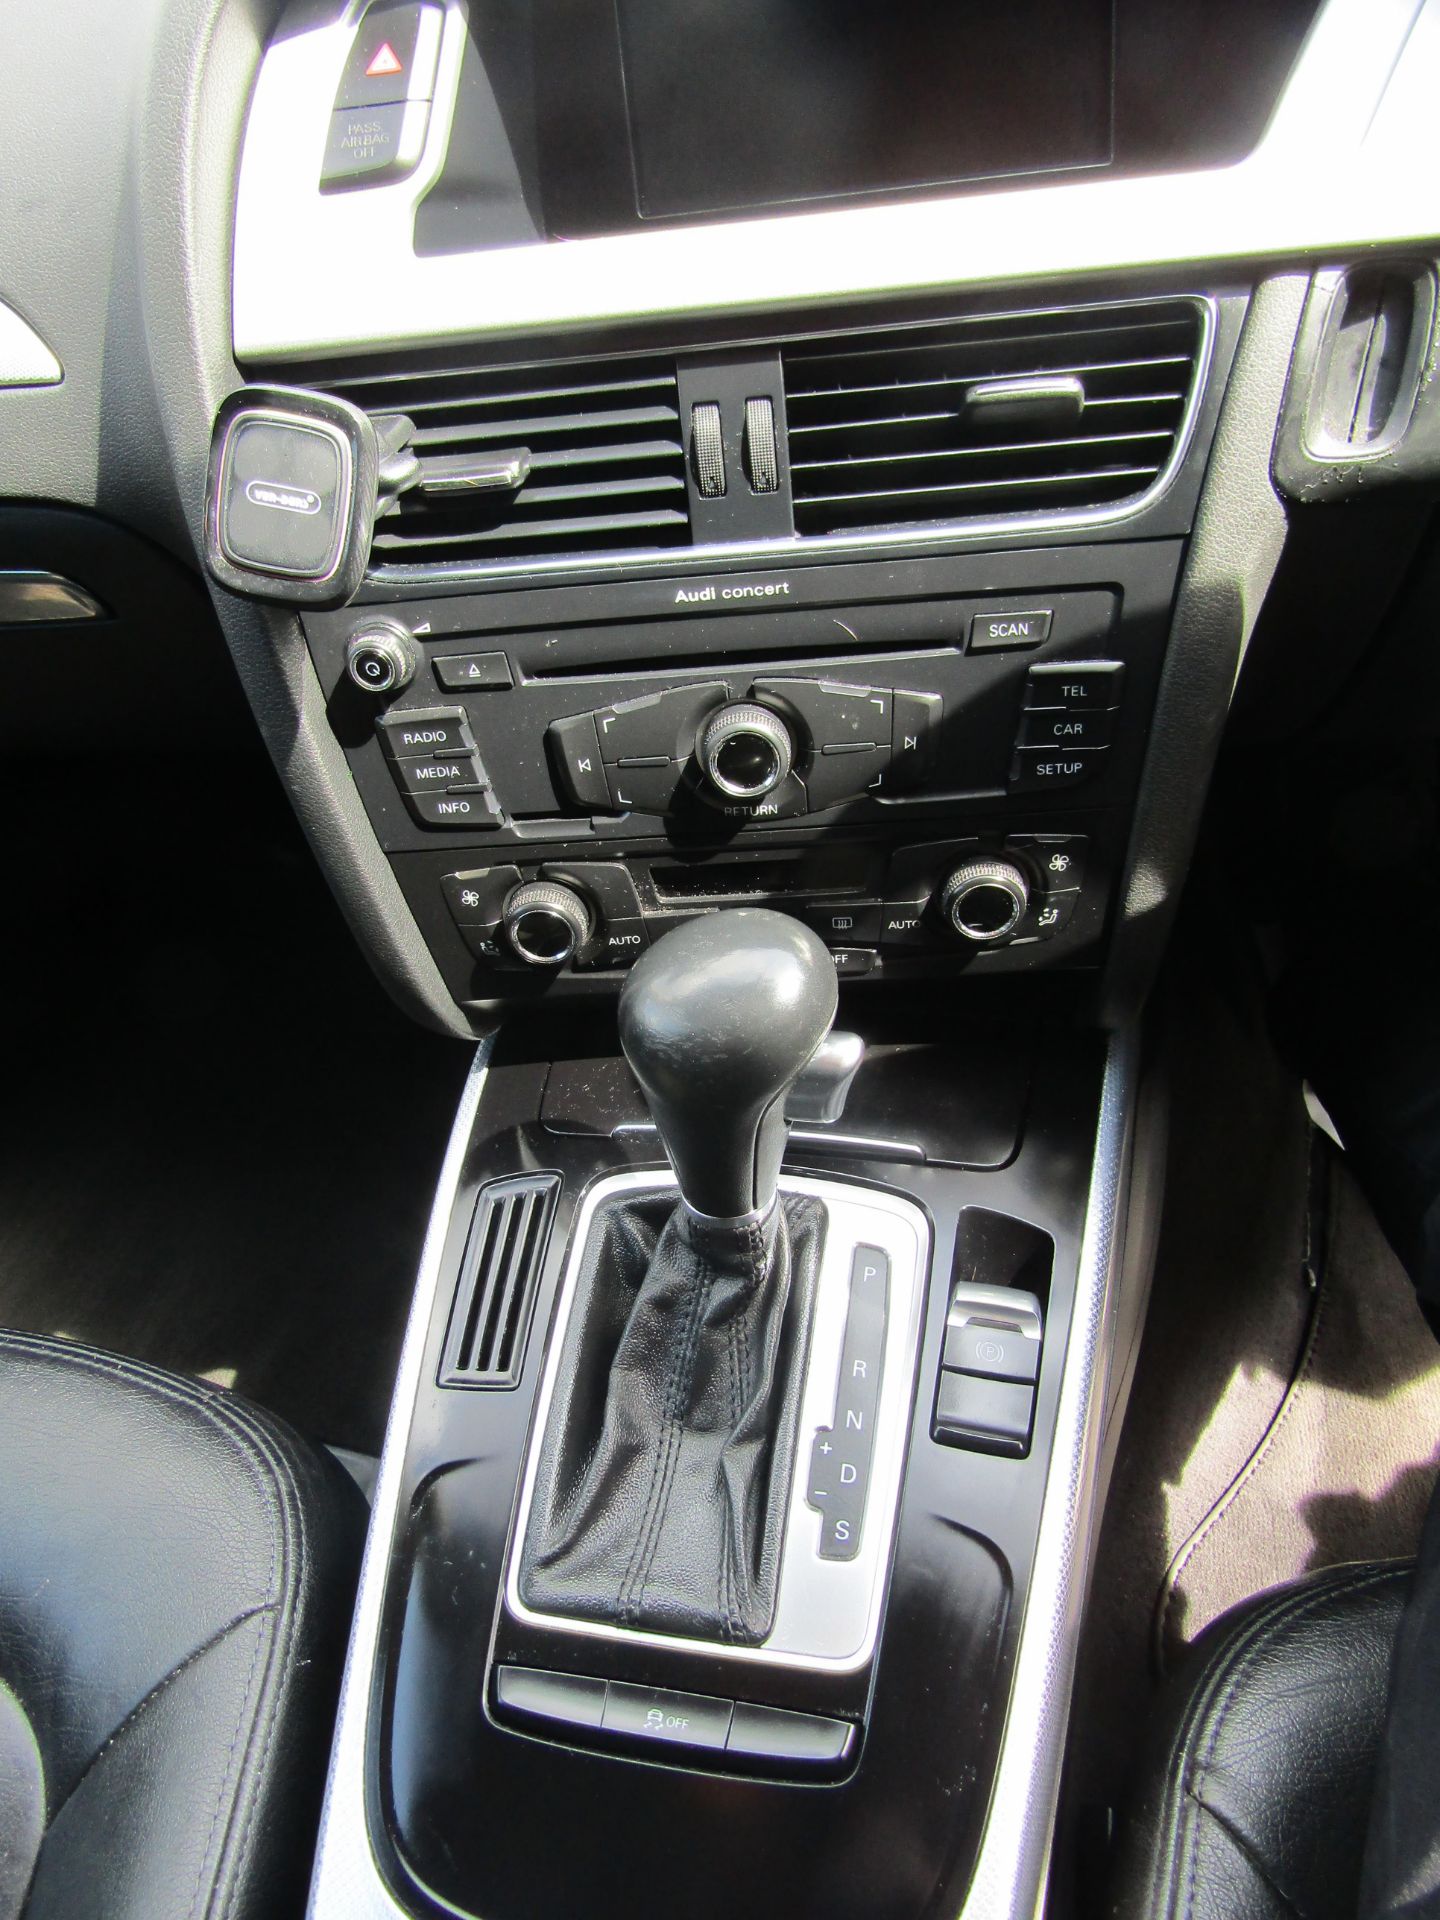 2011 Audi A4 SE TDI CVT 2.0TDI, 150,173 miles, MOT Until 14th October 2024, starts and drive, V5 - Image 6 of 15